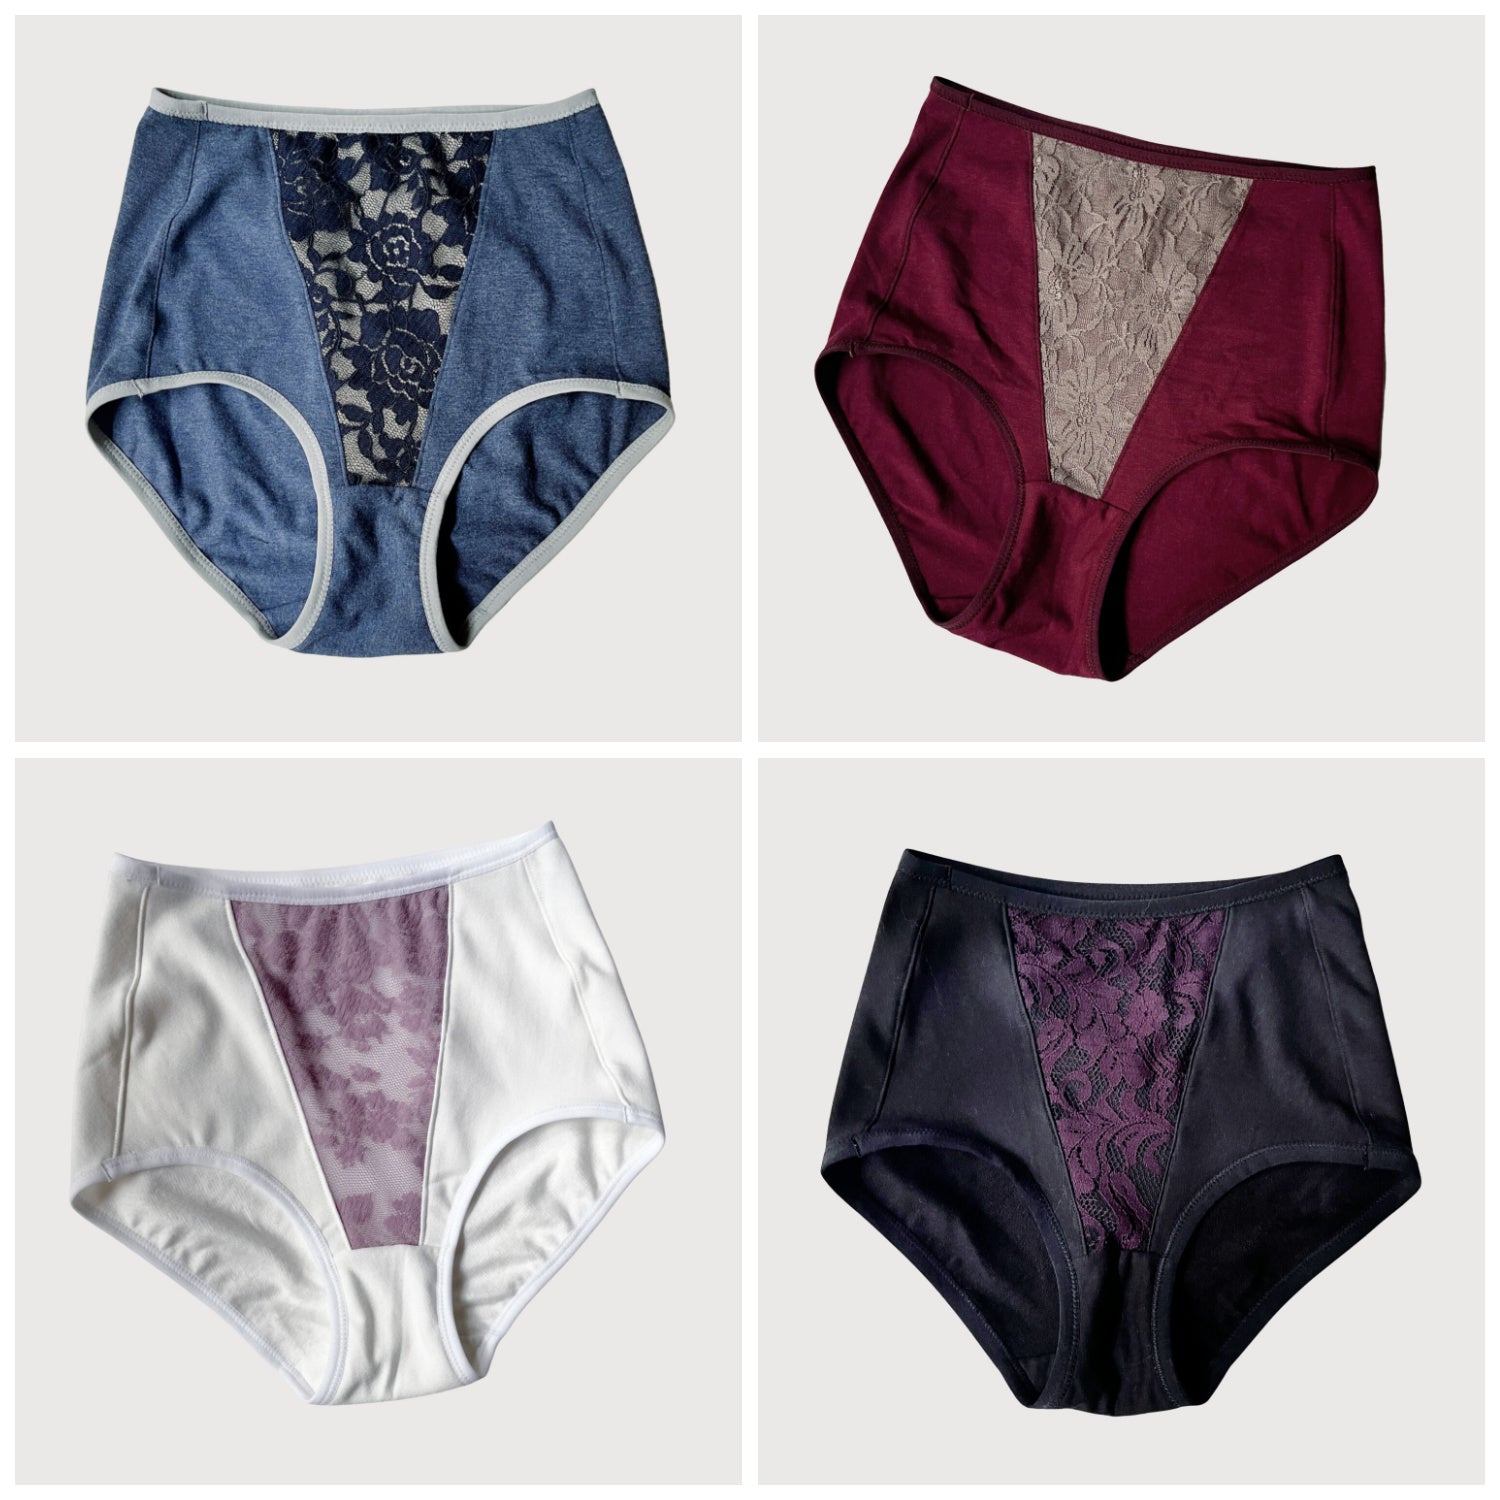 Wool underwear brief for women  Shop women's lingerie made in Canada –  econica